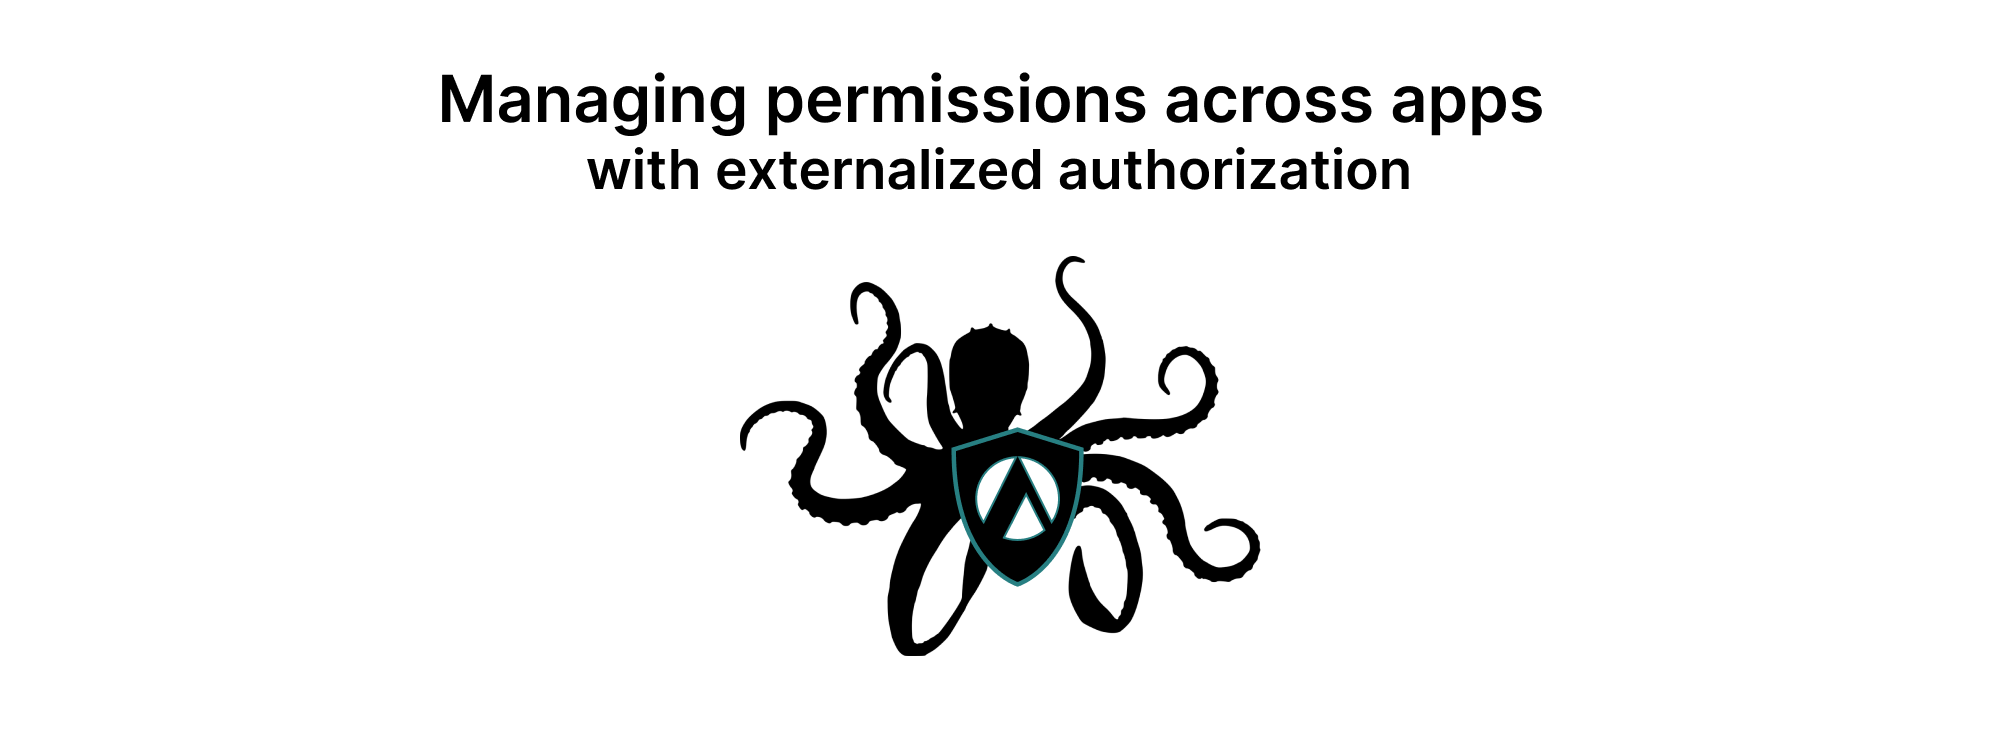 Aserto externalized authorization service